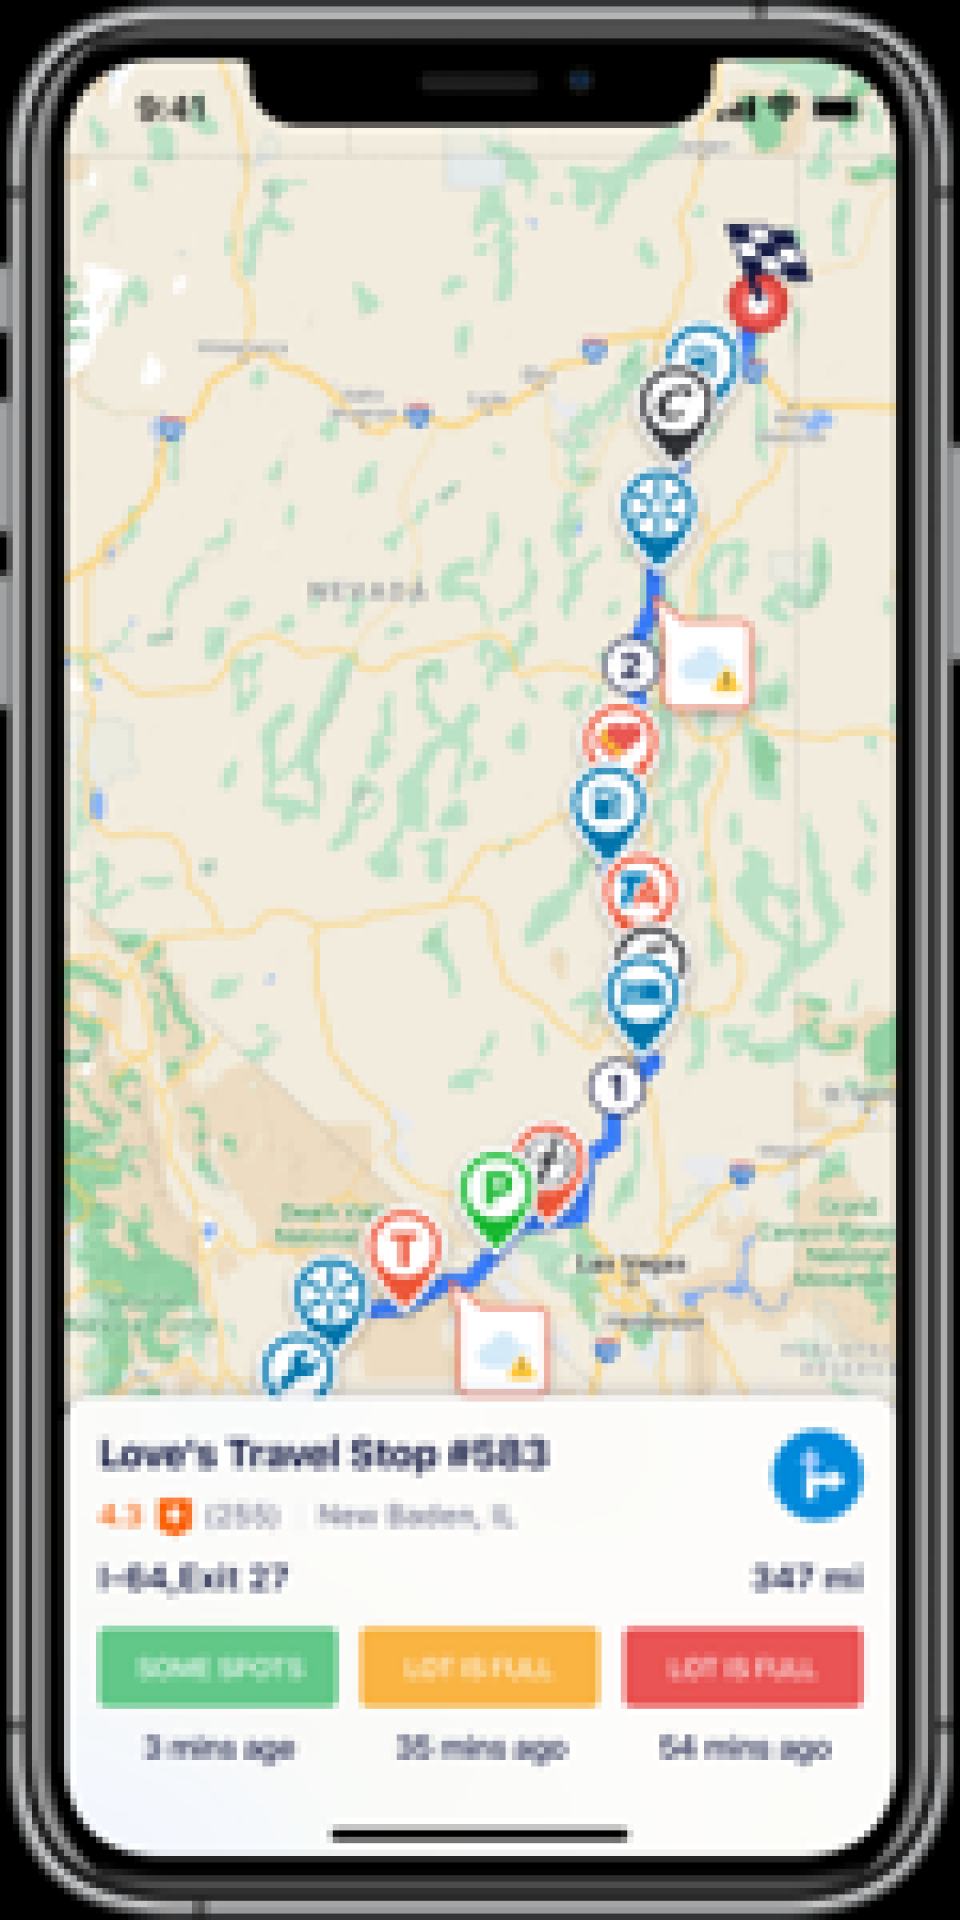 Trucker Path Driver App